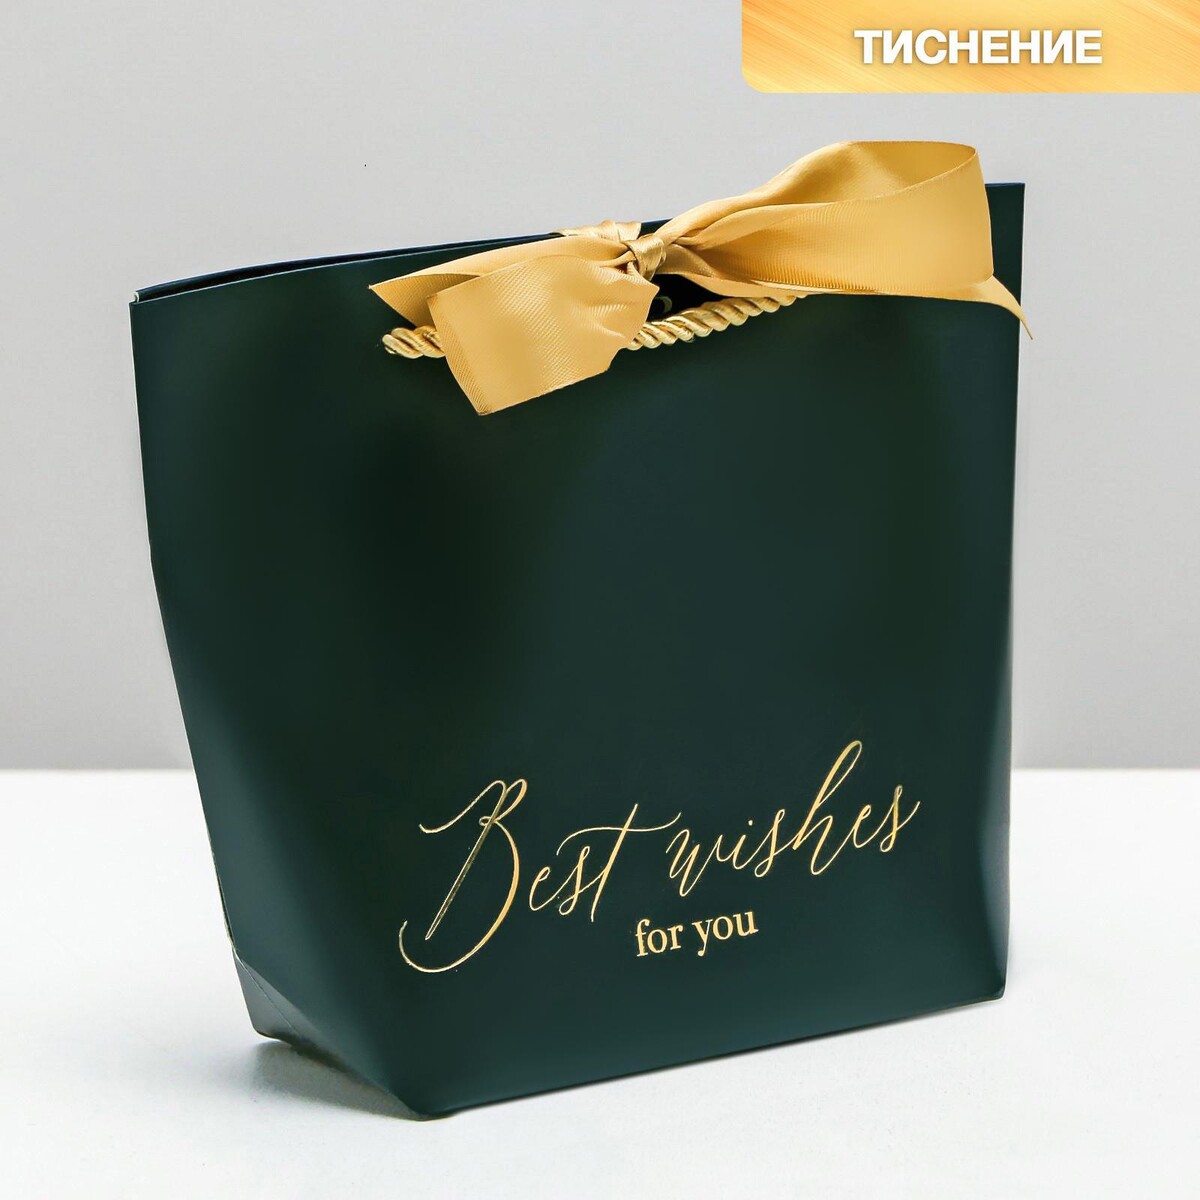 Пакет подарочный, упаковка, best wishes, 14 х 17 х 7 см пакет ламинированный best wishes ms 18 х 23 х 8 см